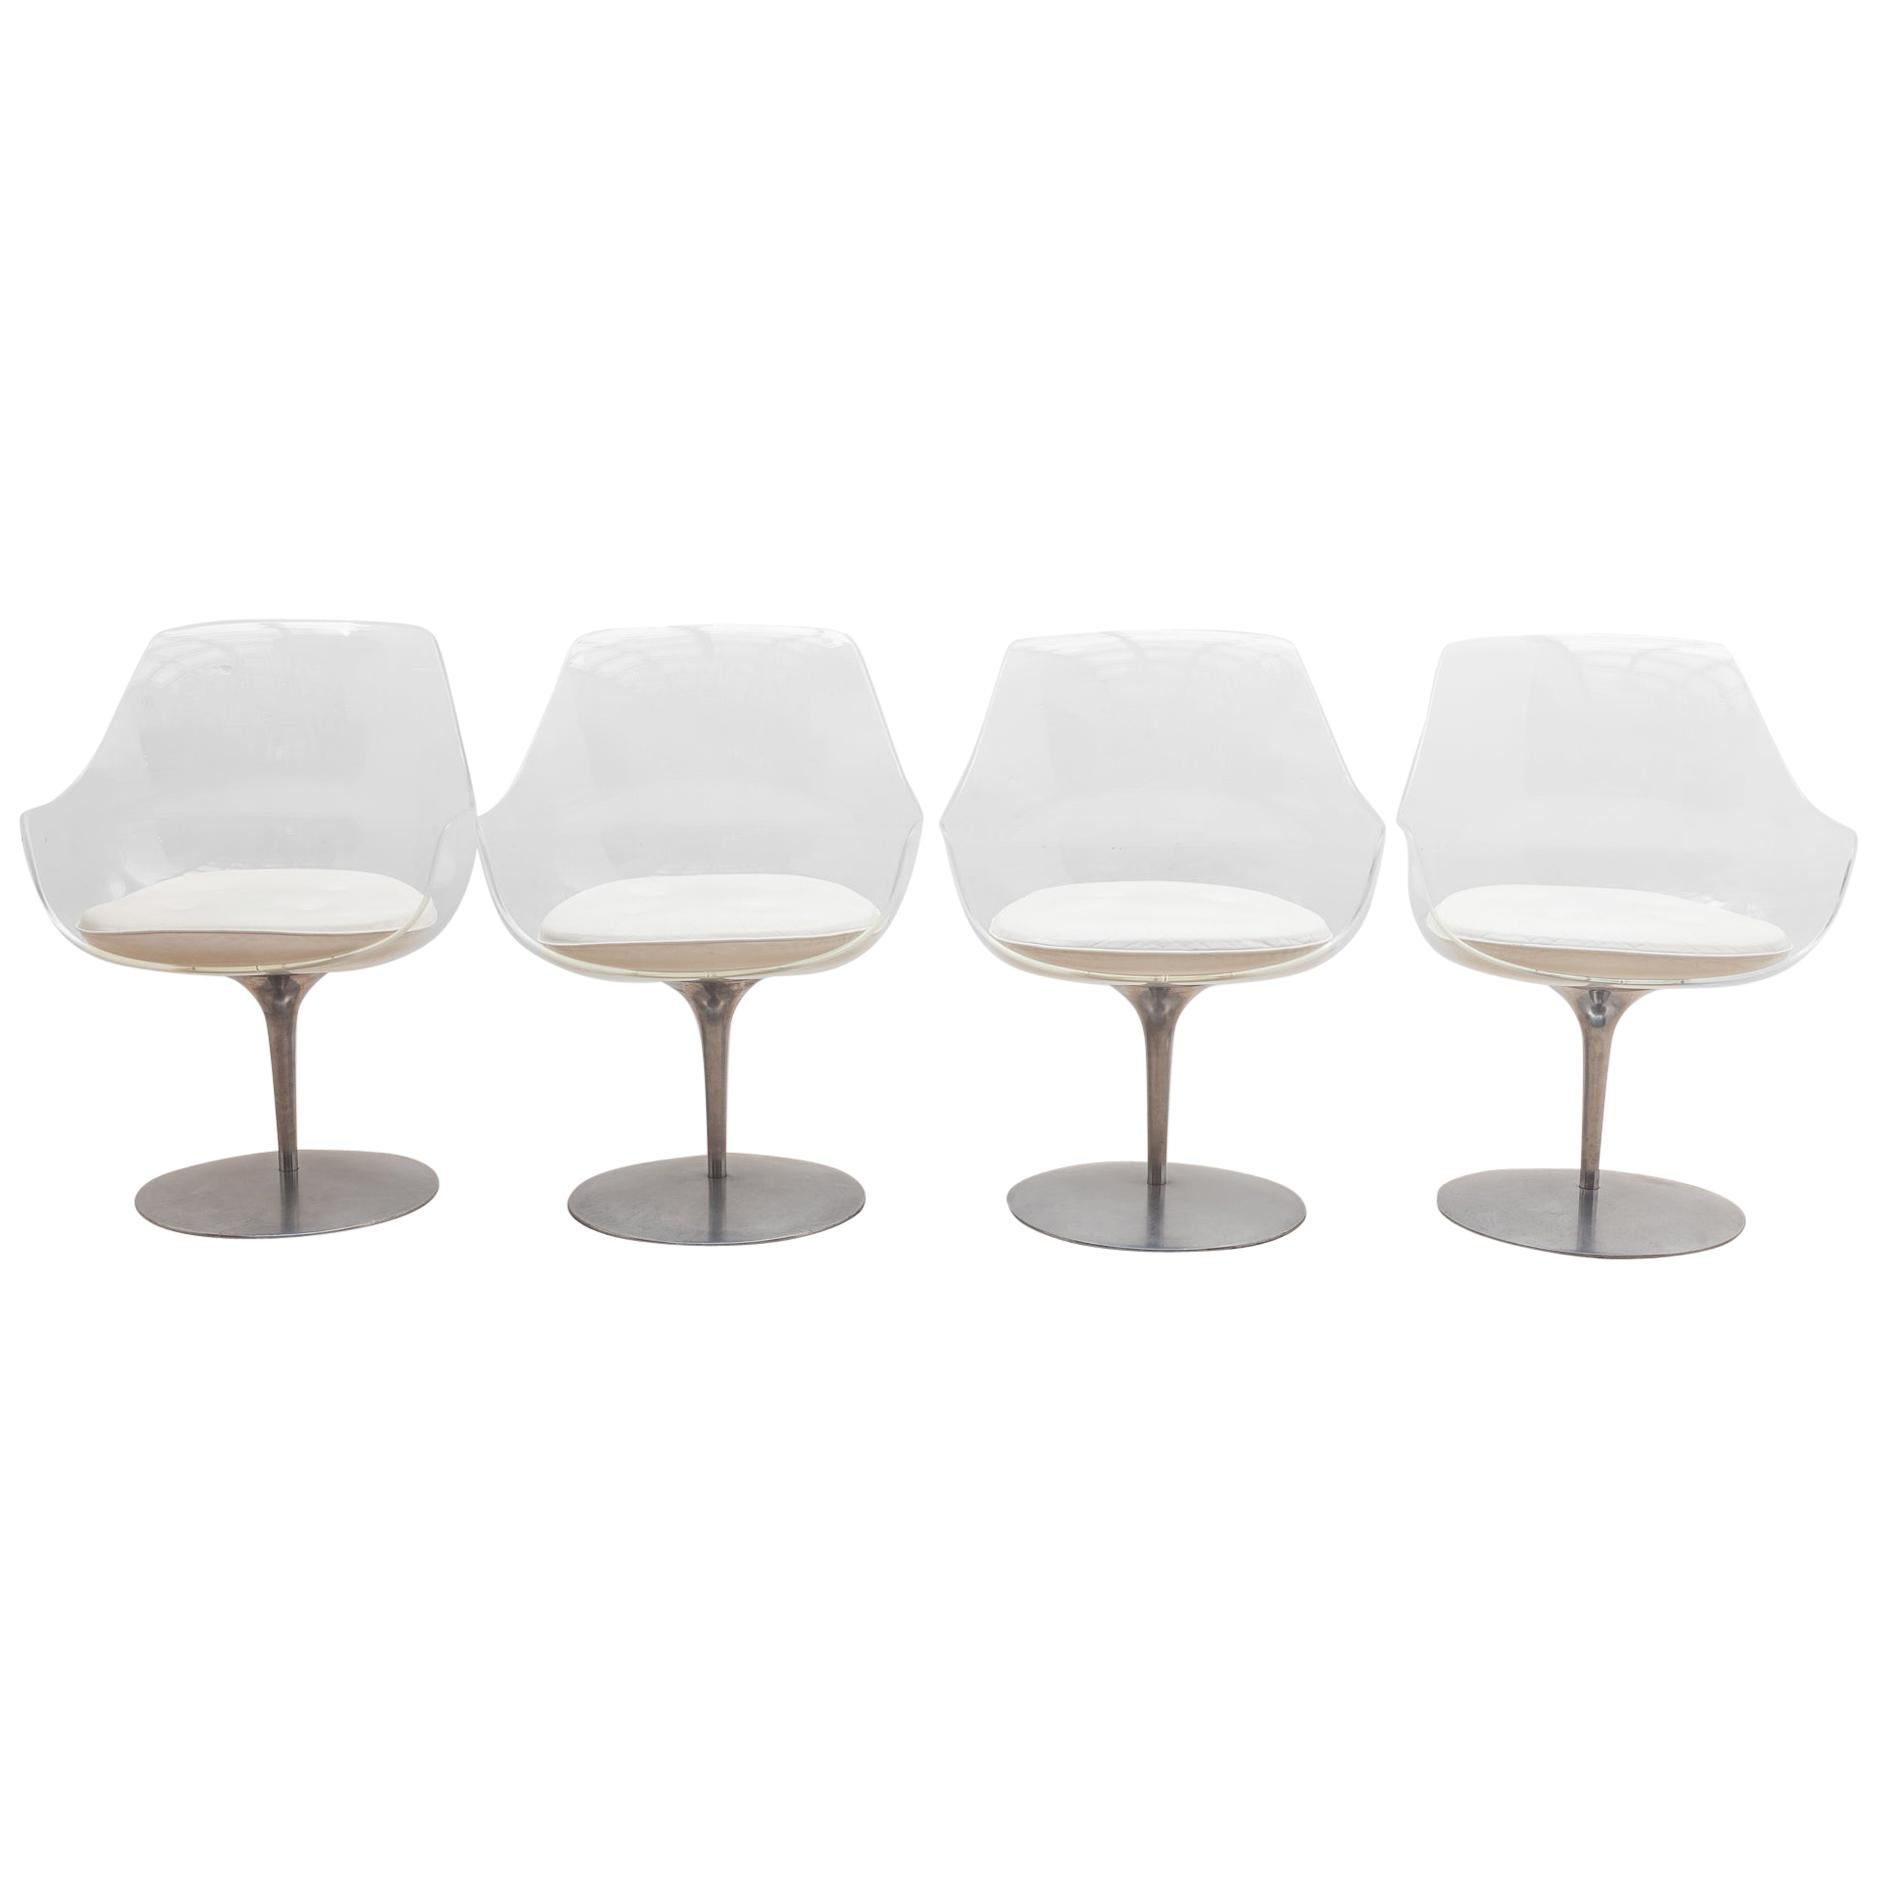 Set of Four Translucent Lucite Chairs designed by Estelle & Erwine Laverne